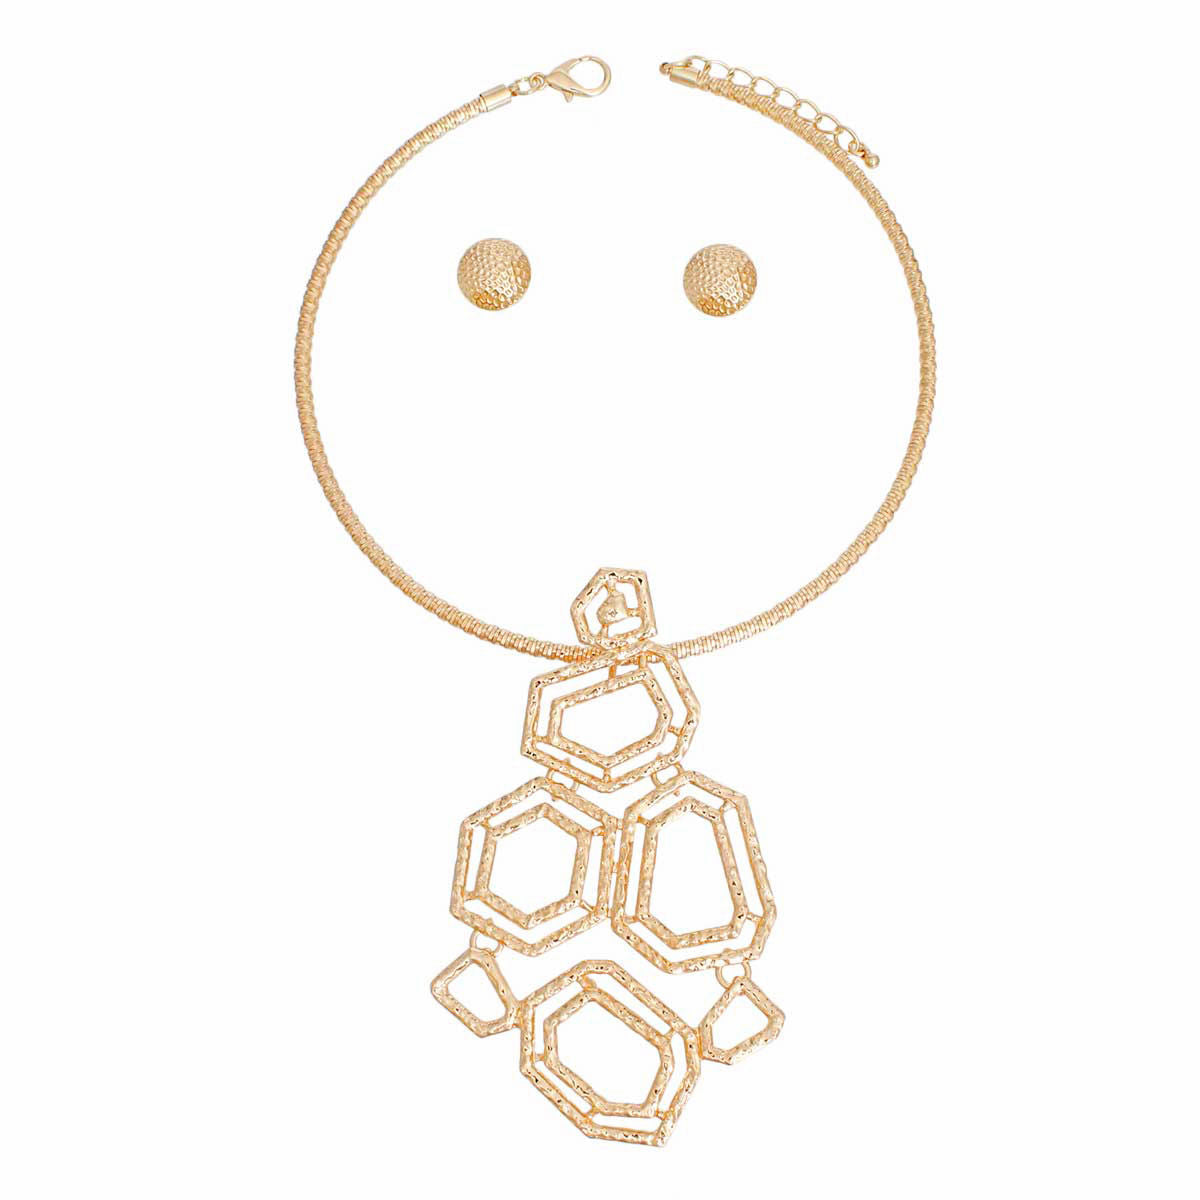 Pendant Necklace Gold Geometric Set for Women